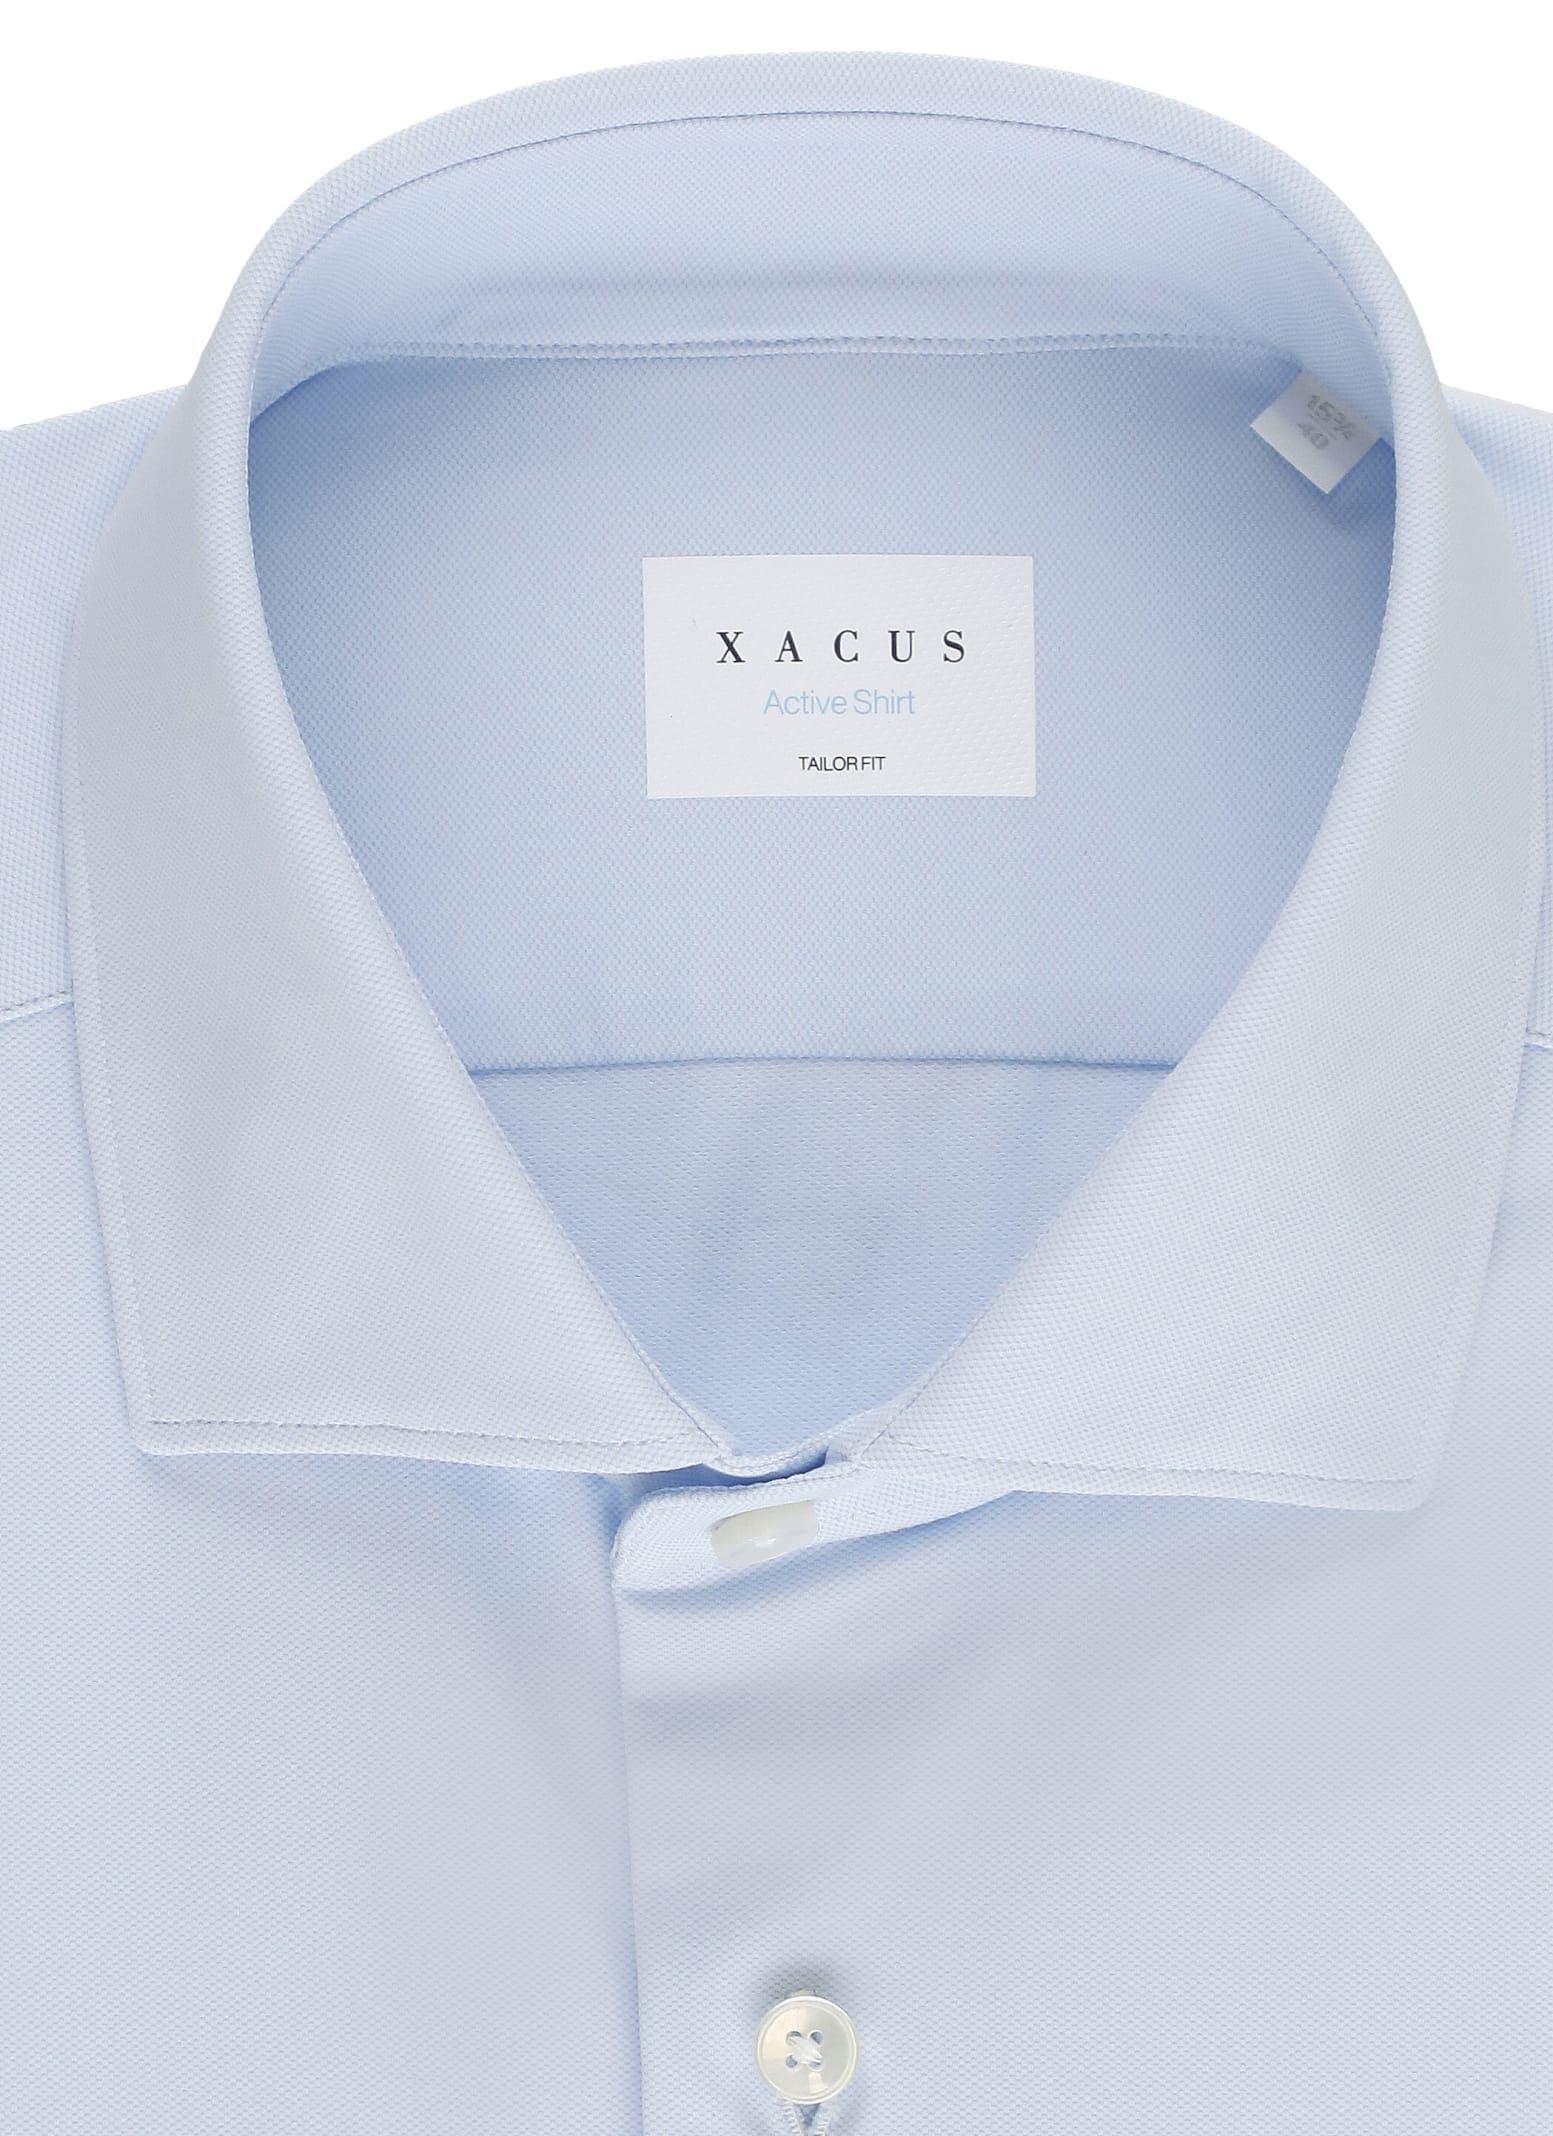 Shop Xacus Active Shirt